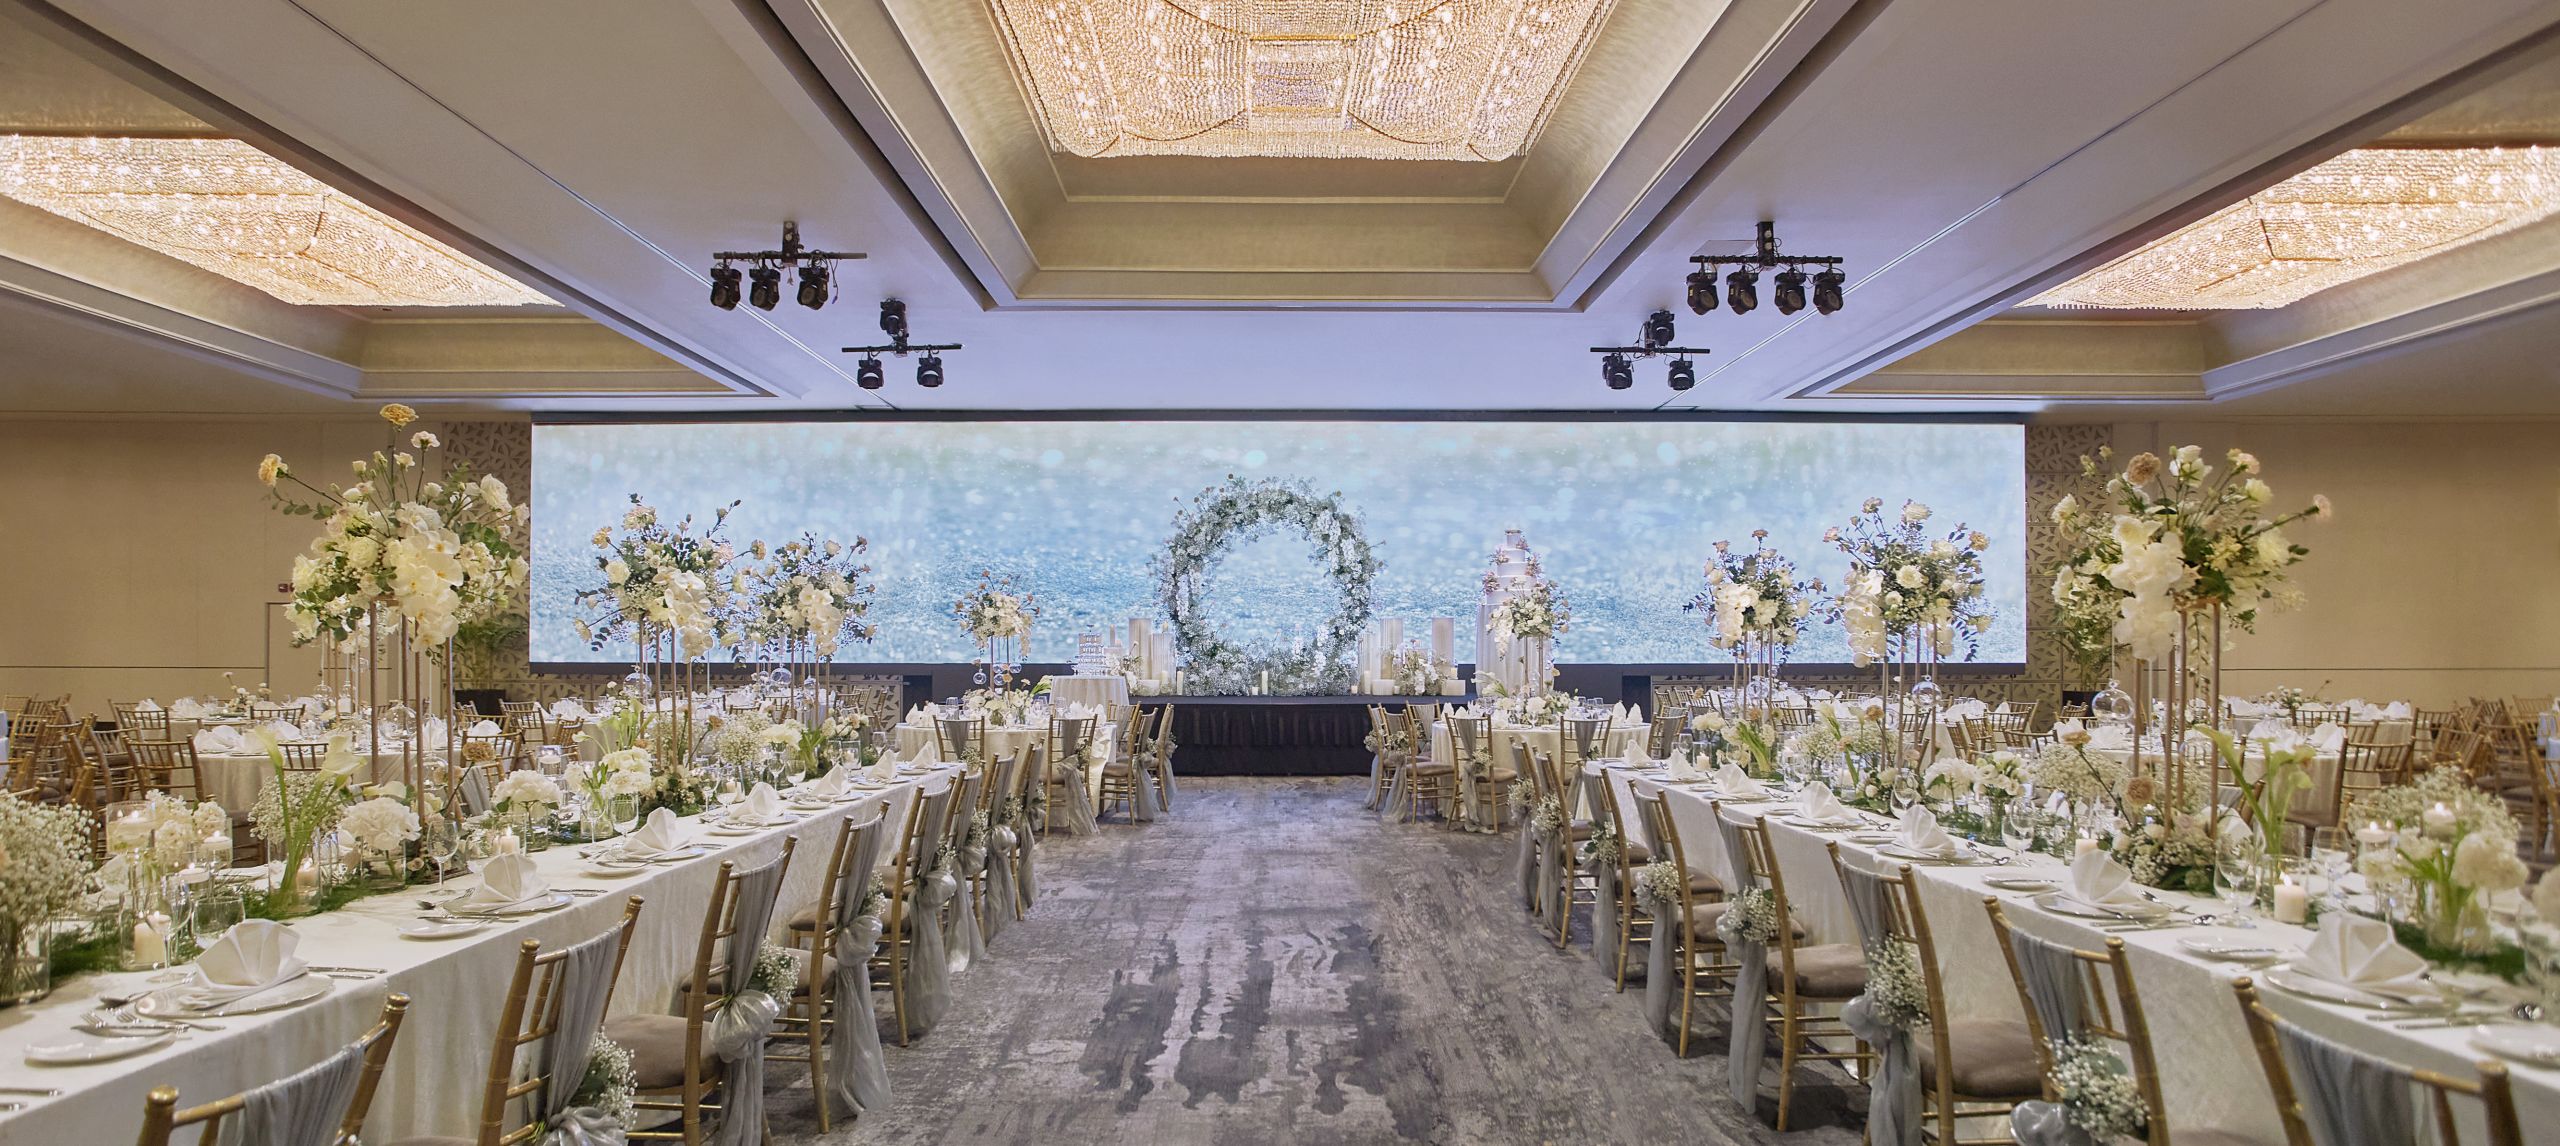 ballroom with long dining tables setup for wedding